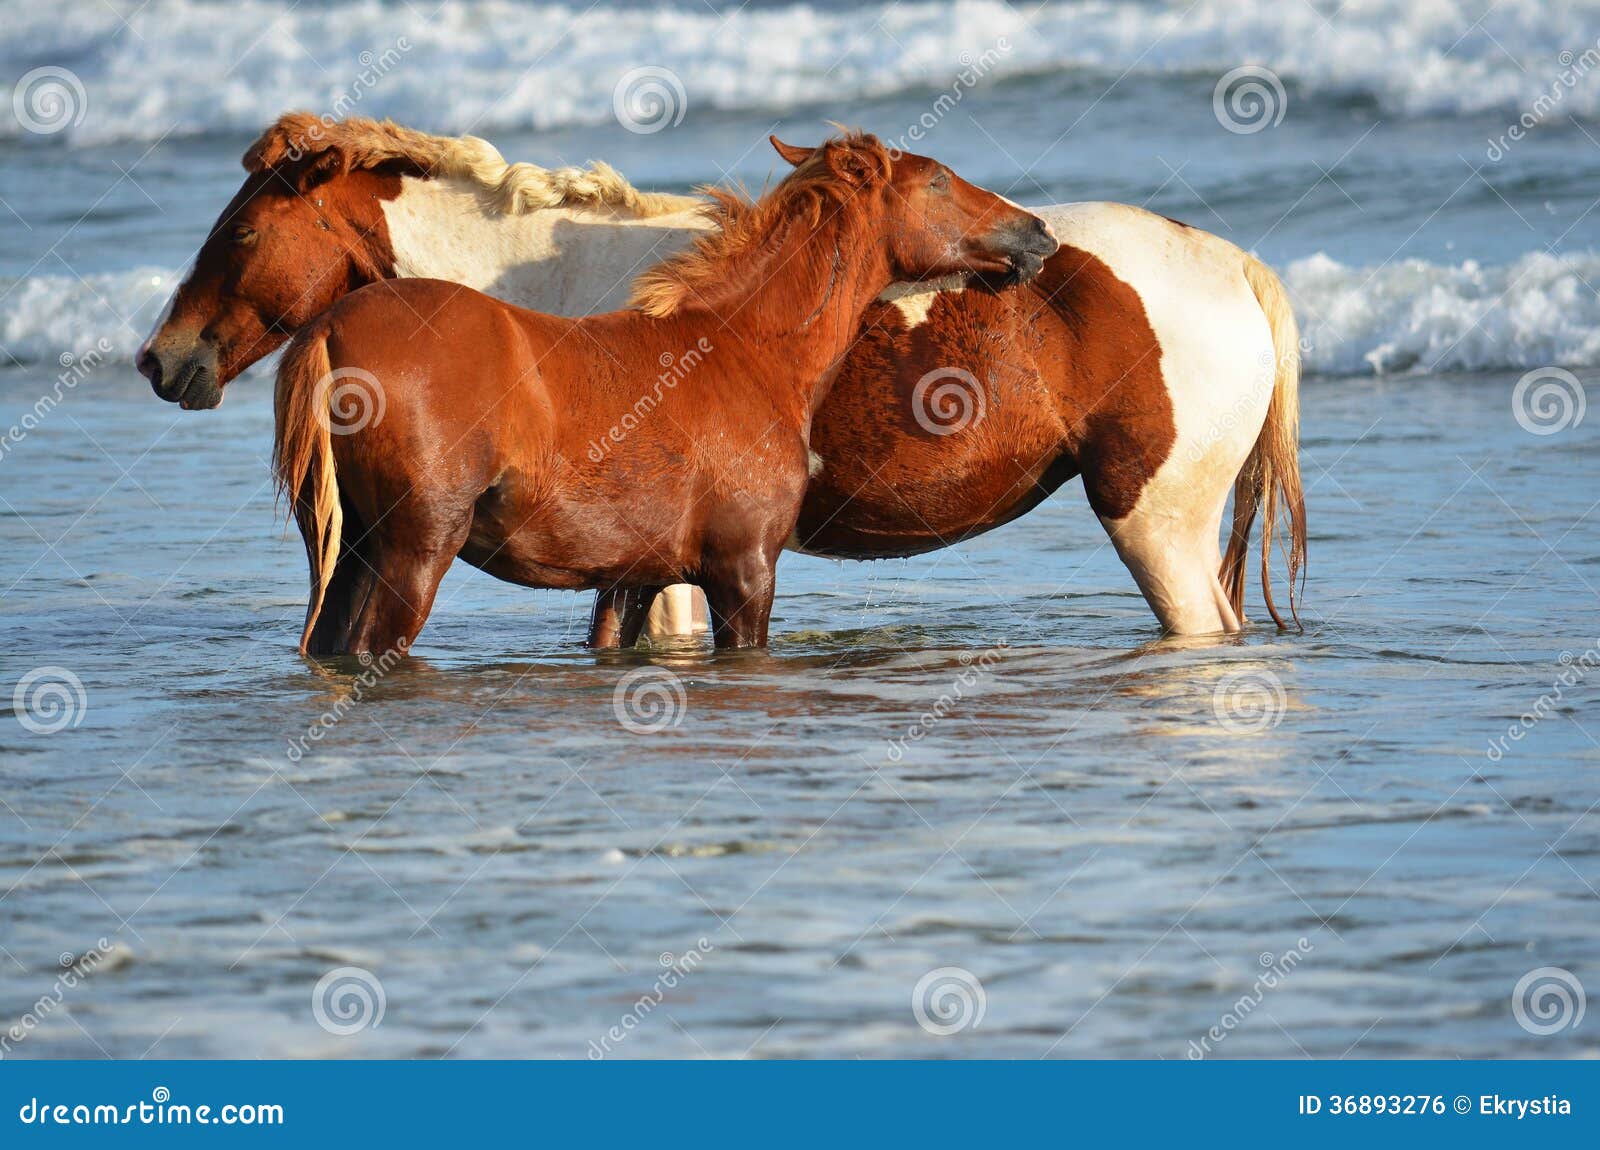 horses relaxing at the beach, playa el espino